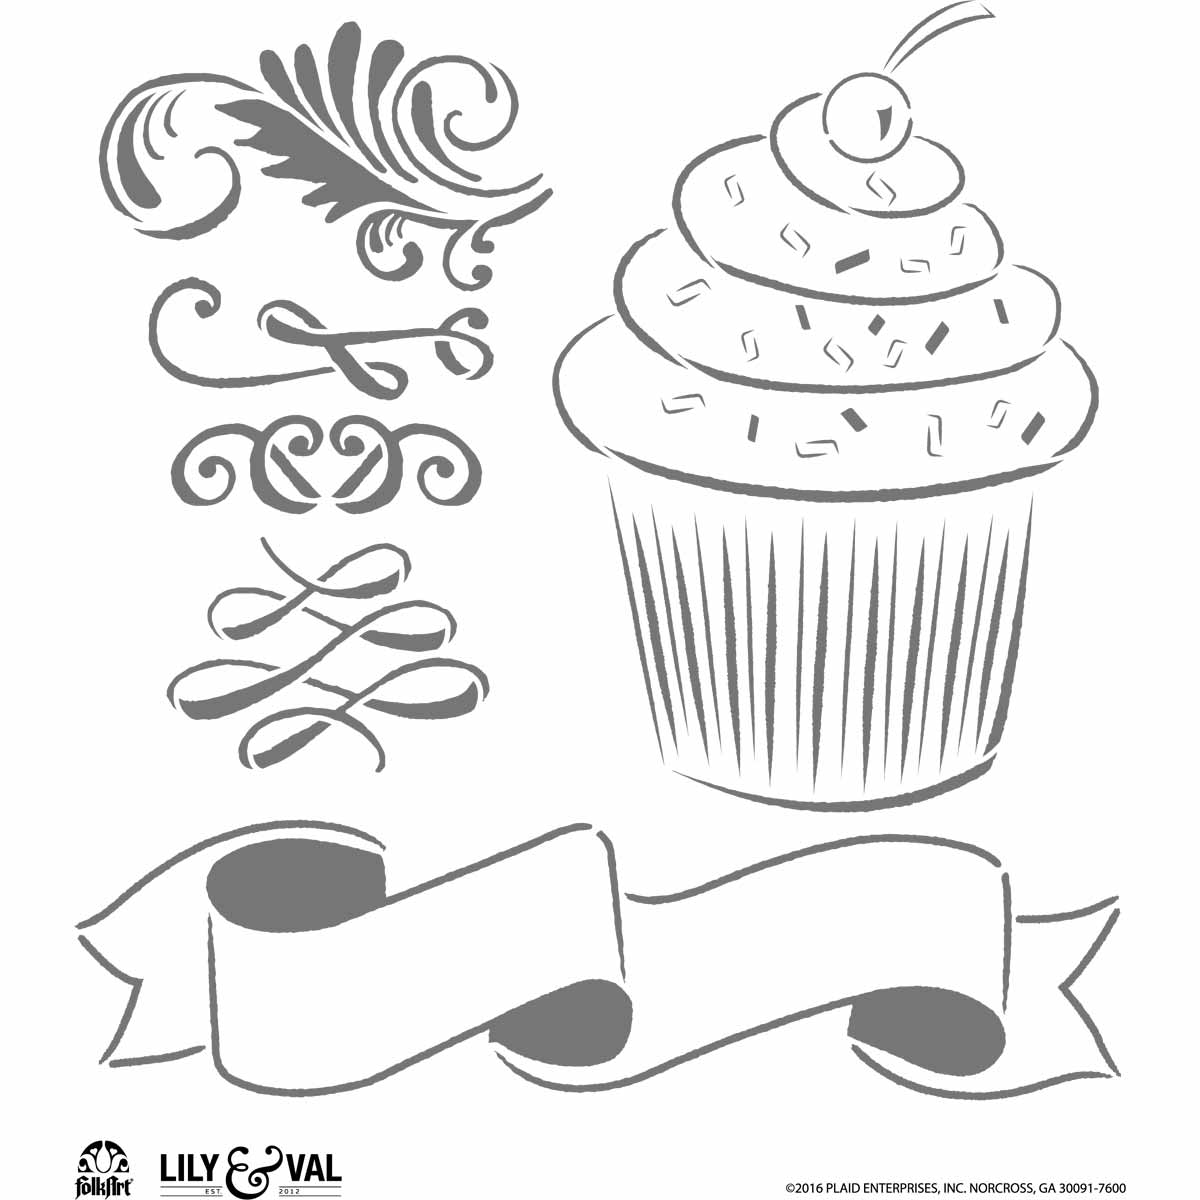 FolkArt ® Lily & Val™ Stencils - Variety Packs - Cupcake - 13250